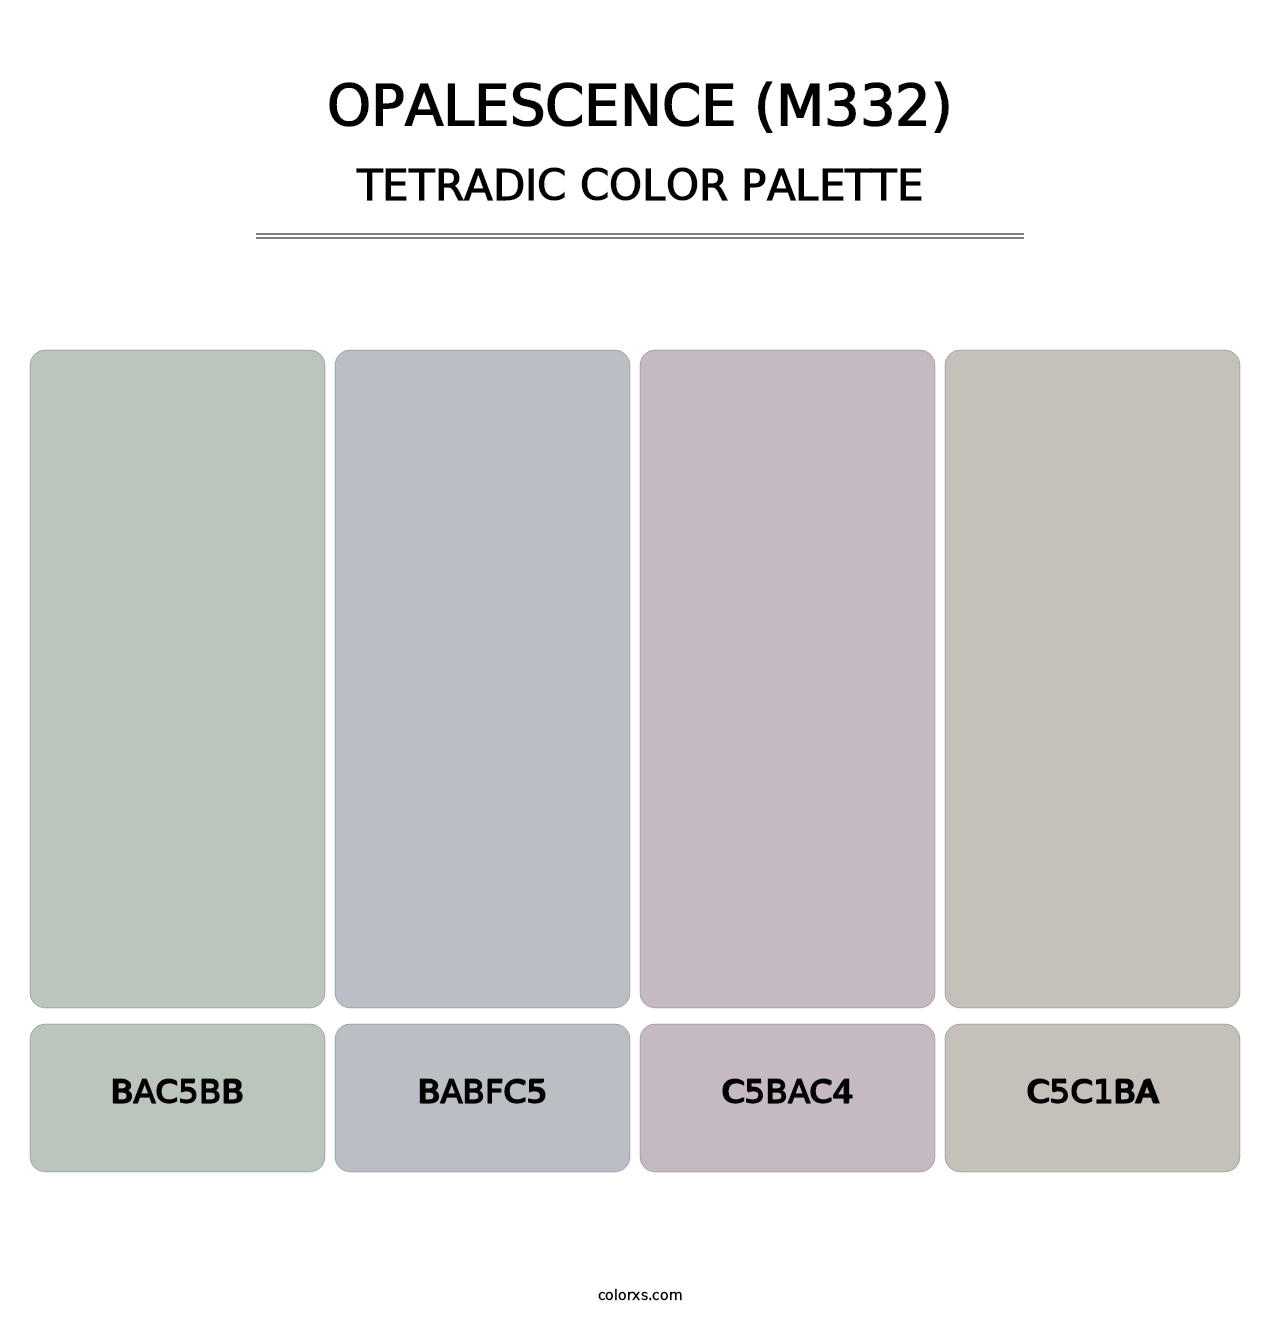 Opalescence (M332) - Tetradic Color Palette